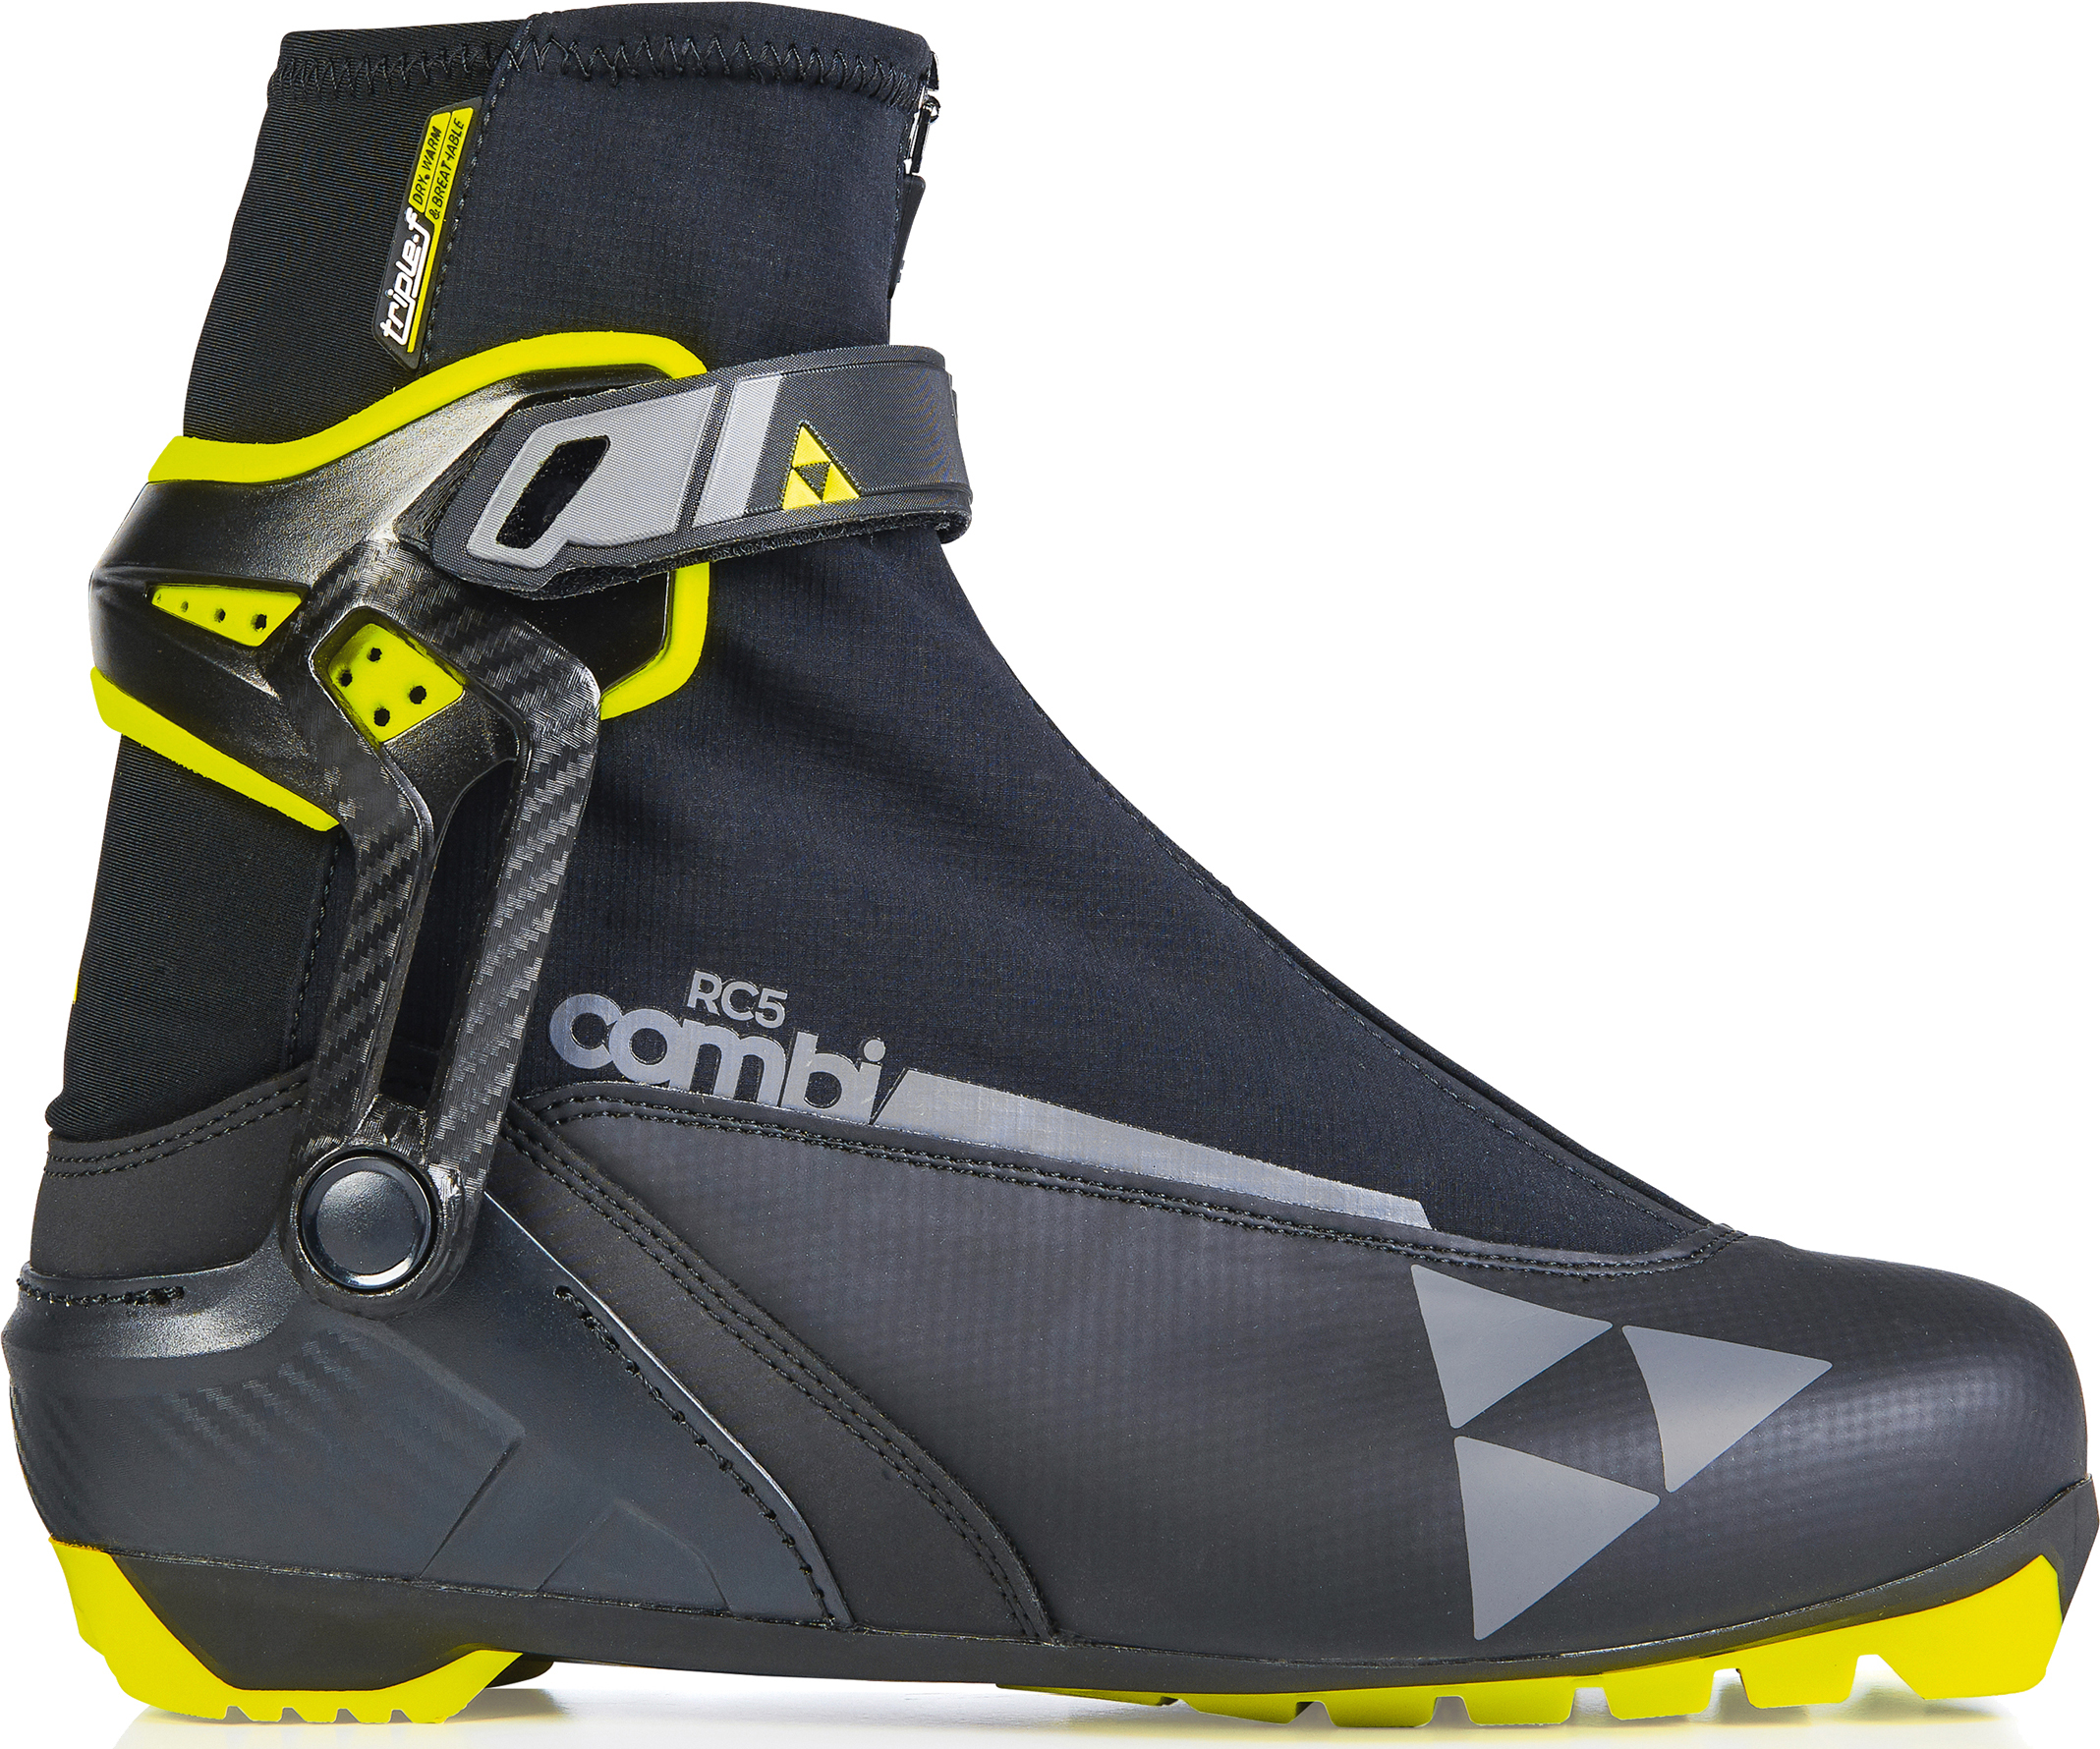 Лыжные ботинки Fischer RC5 Combi 45